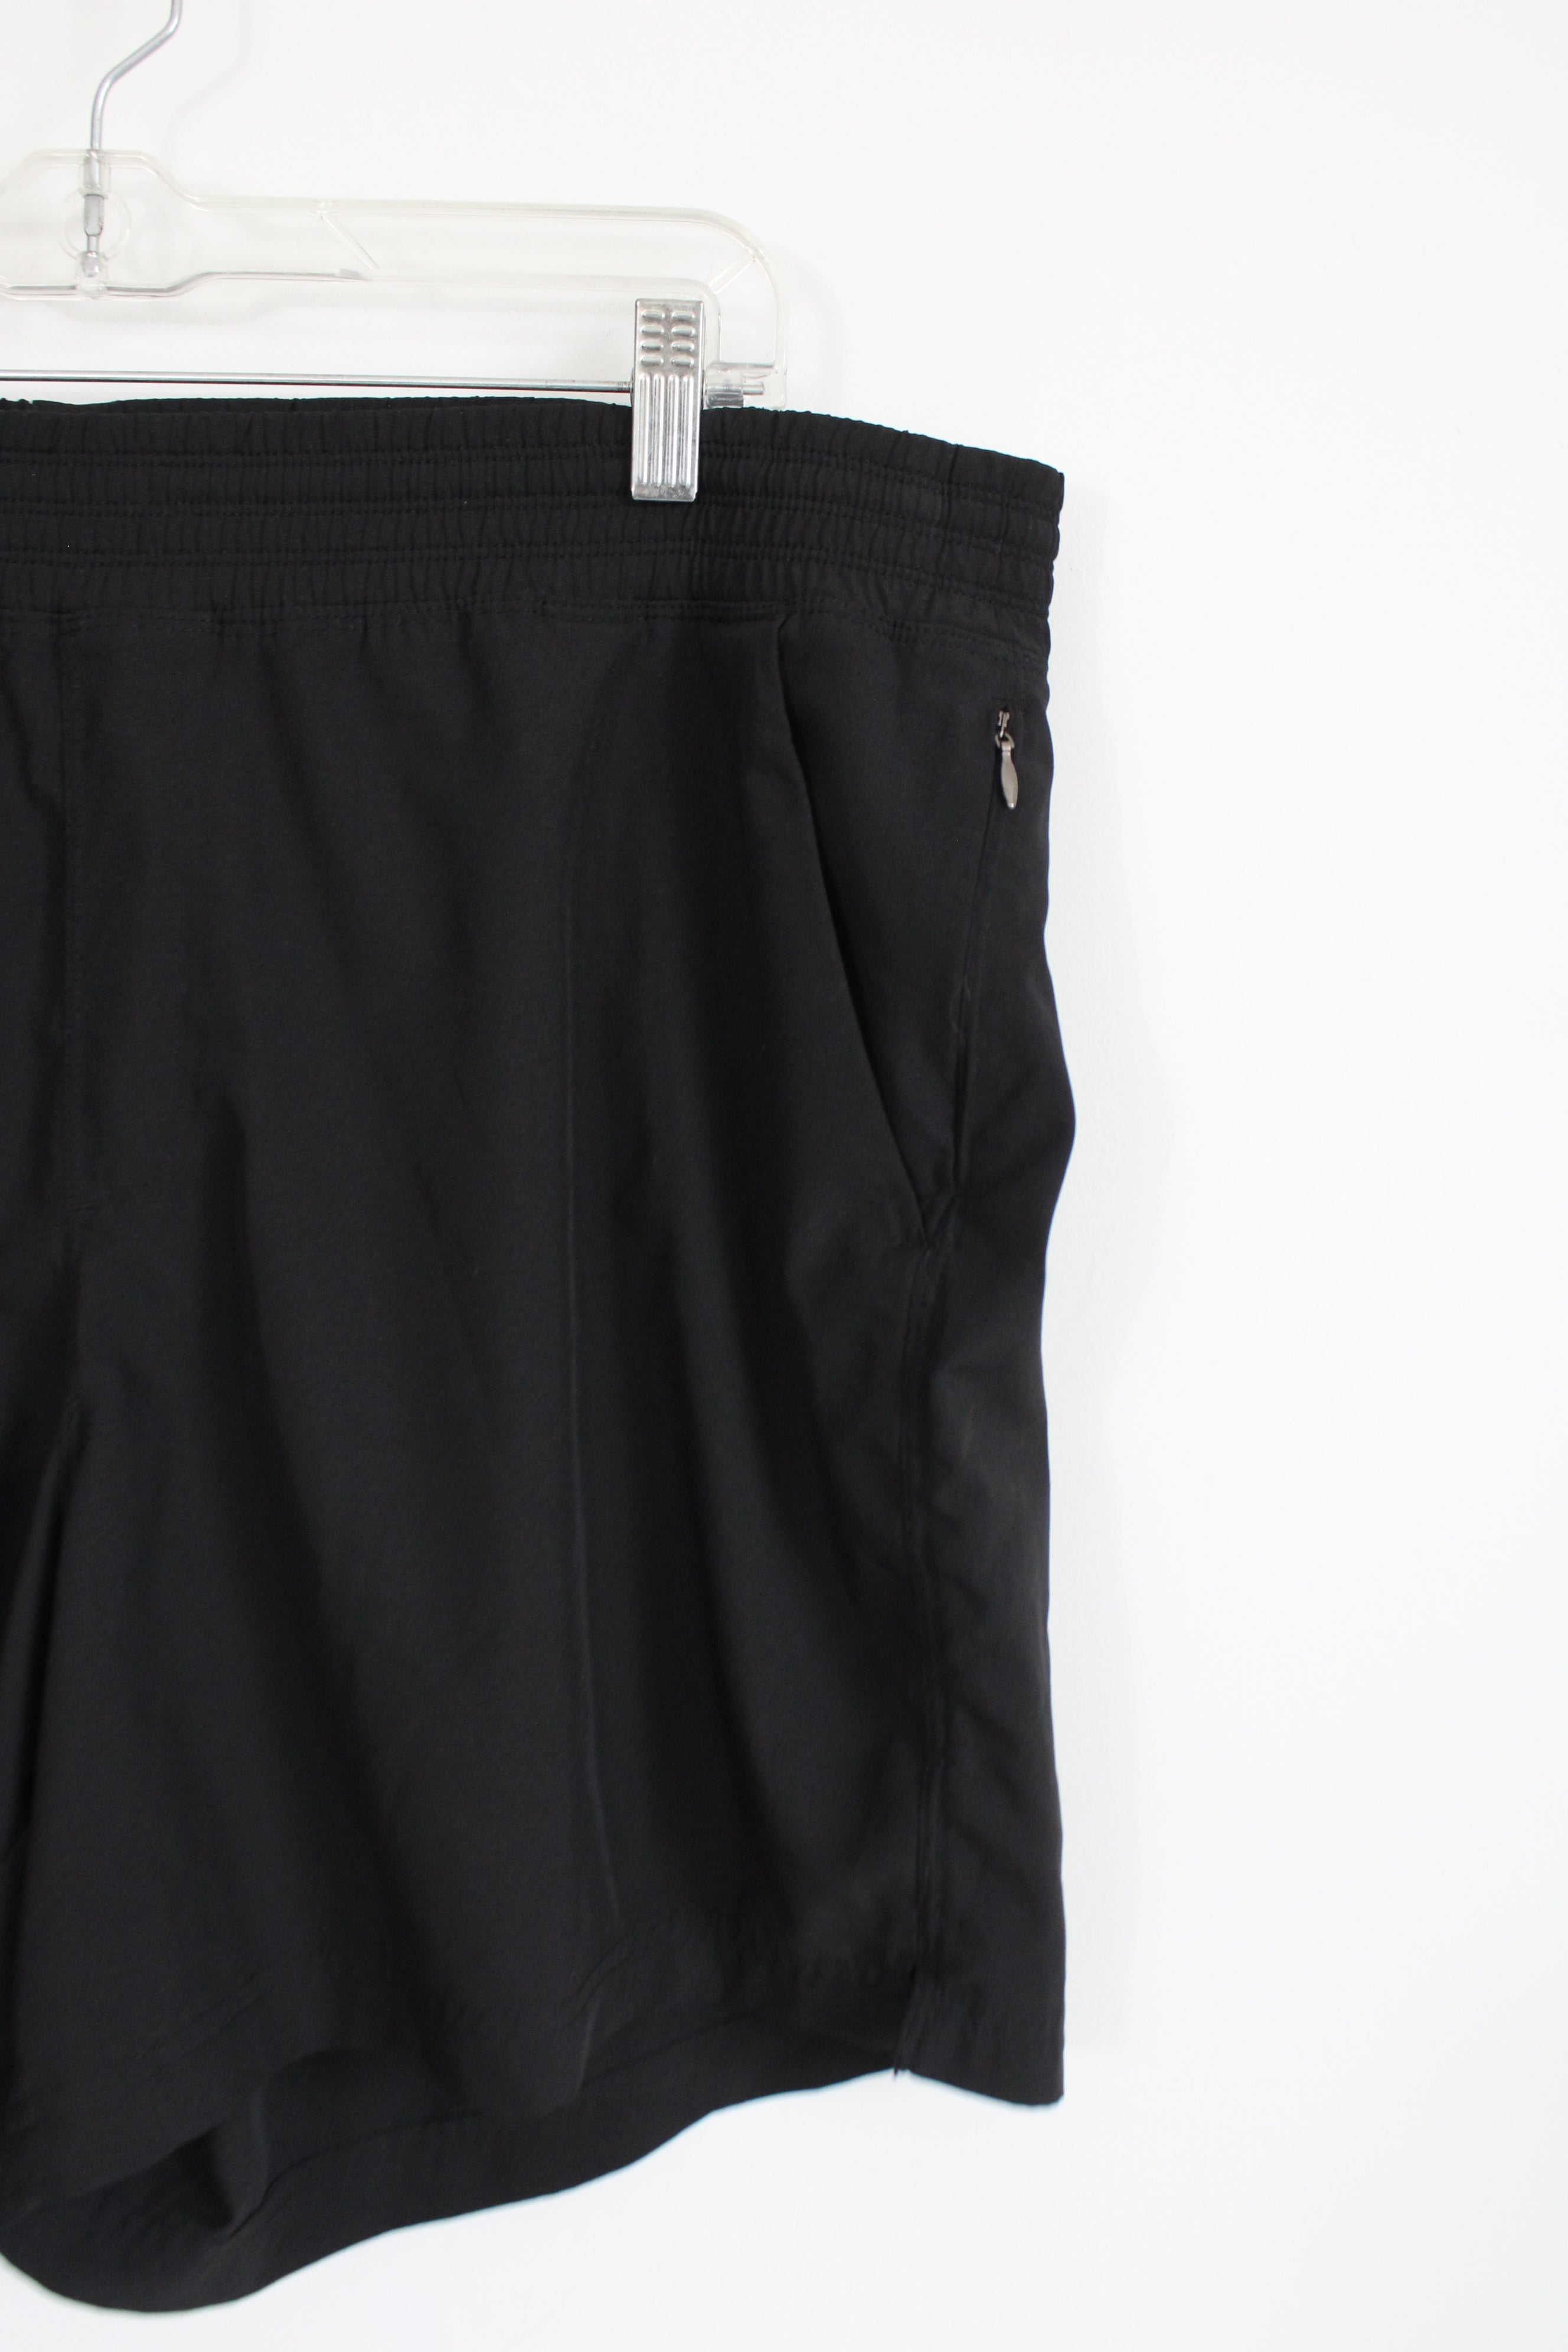 Old Navy StretchTech Black Athletic Shorts | XL